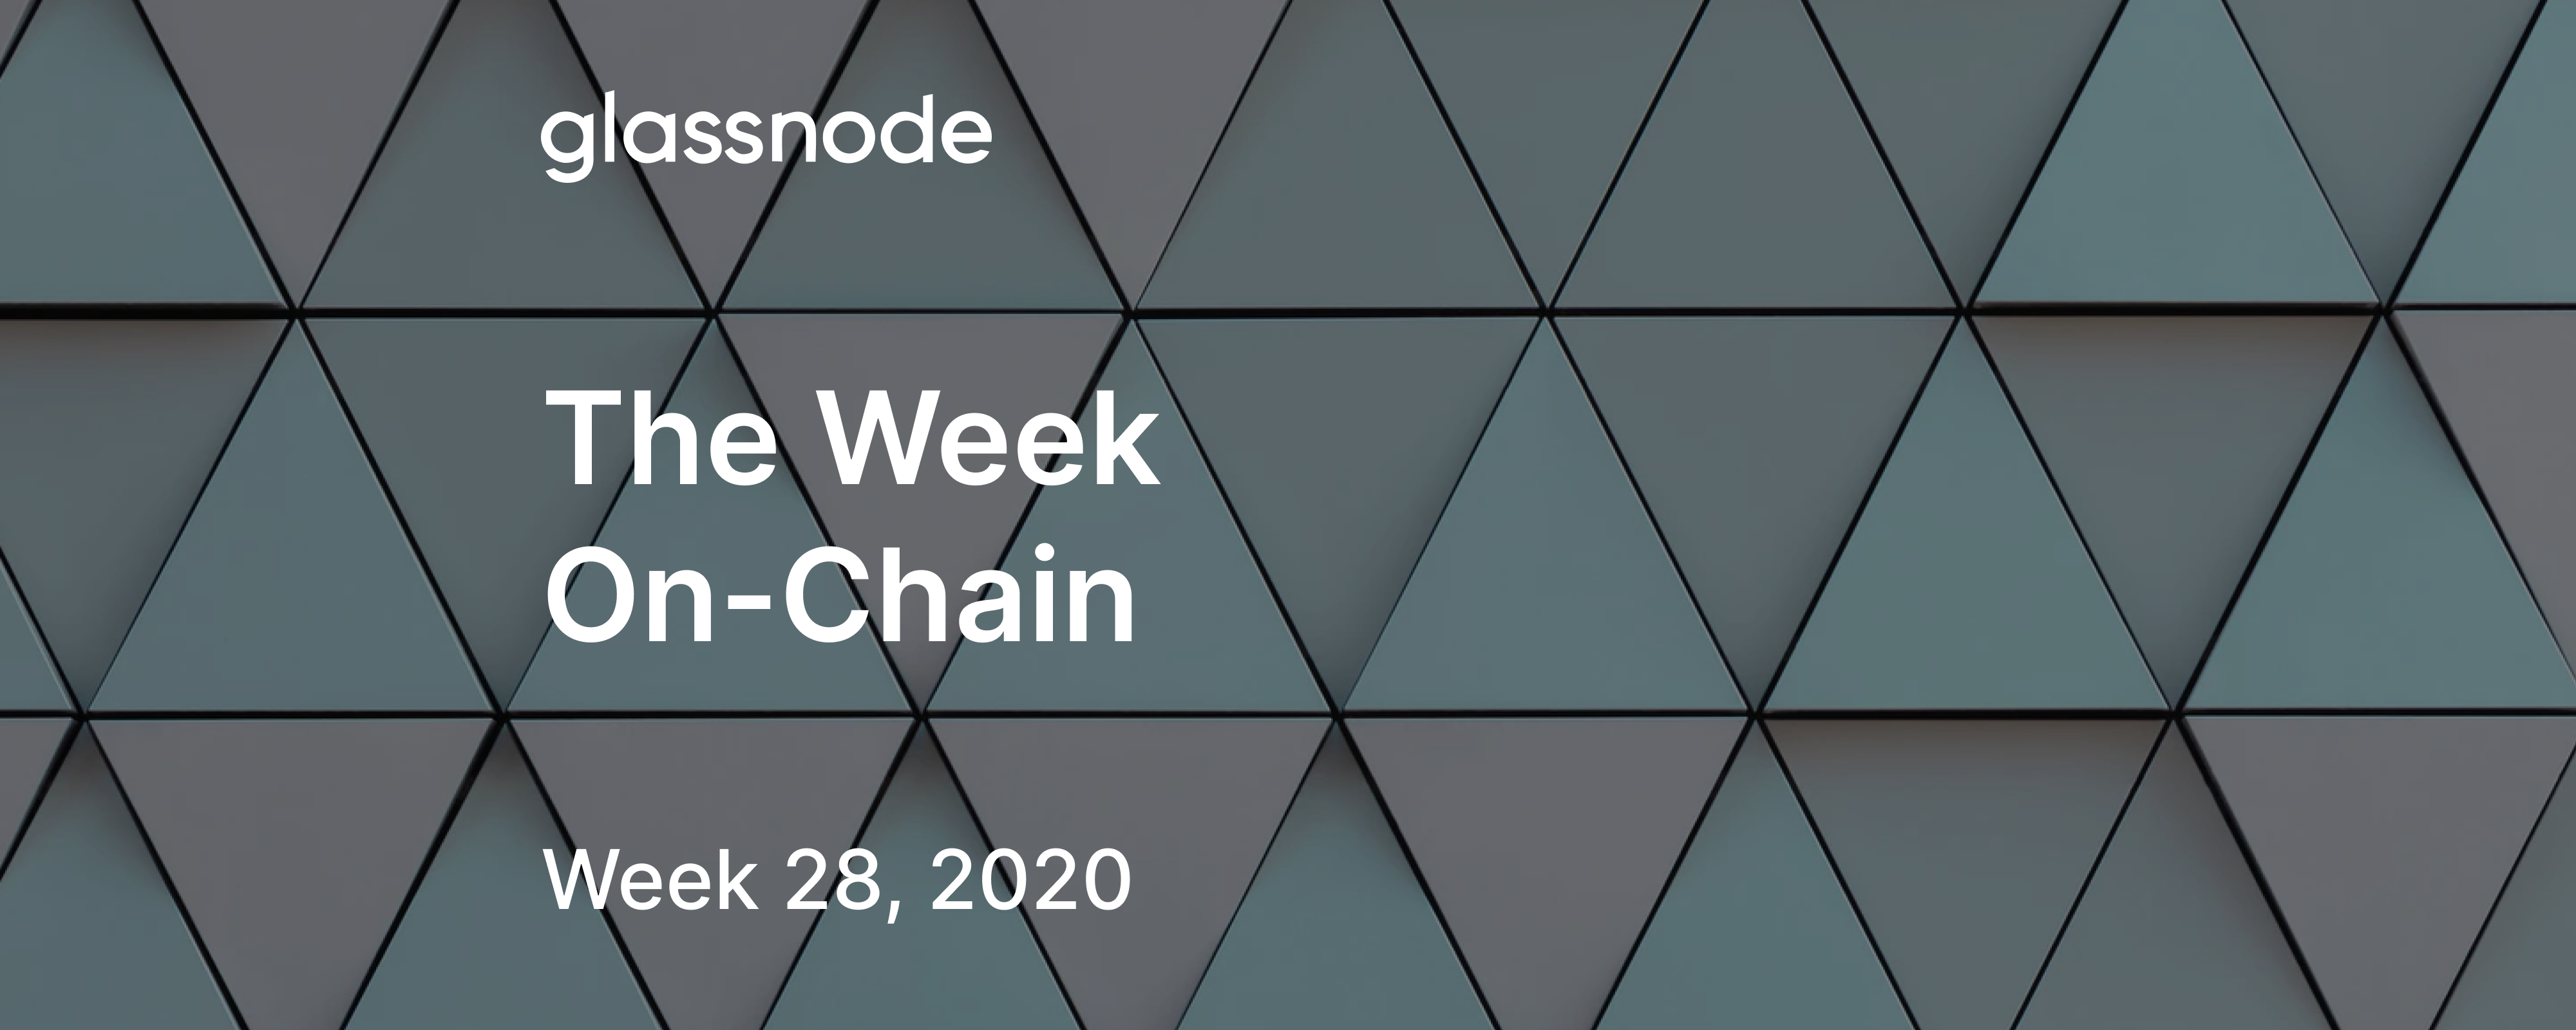 The Week On-Chain (Week 28, 2020)